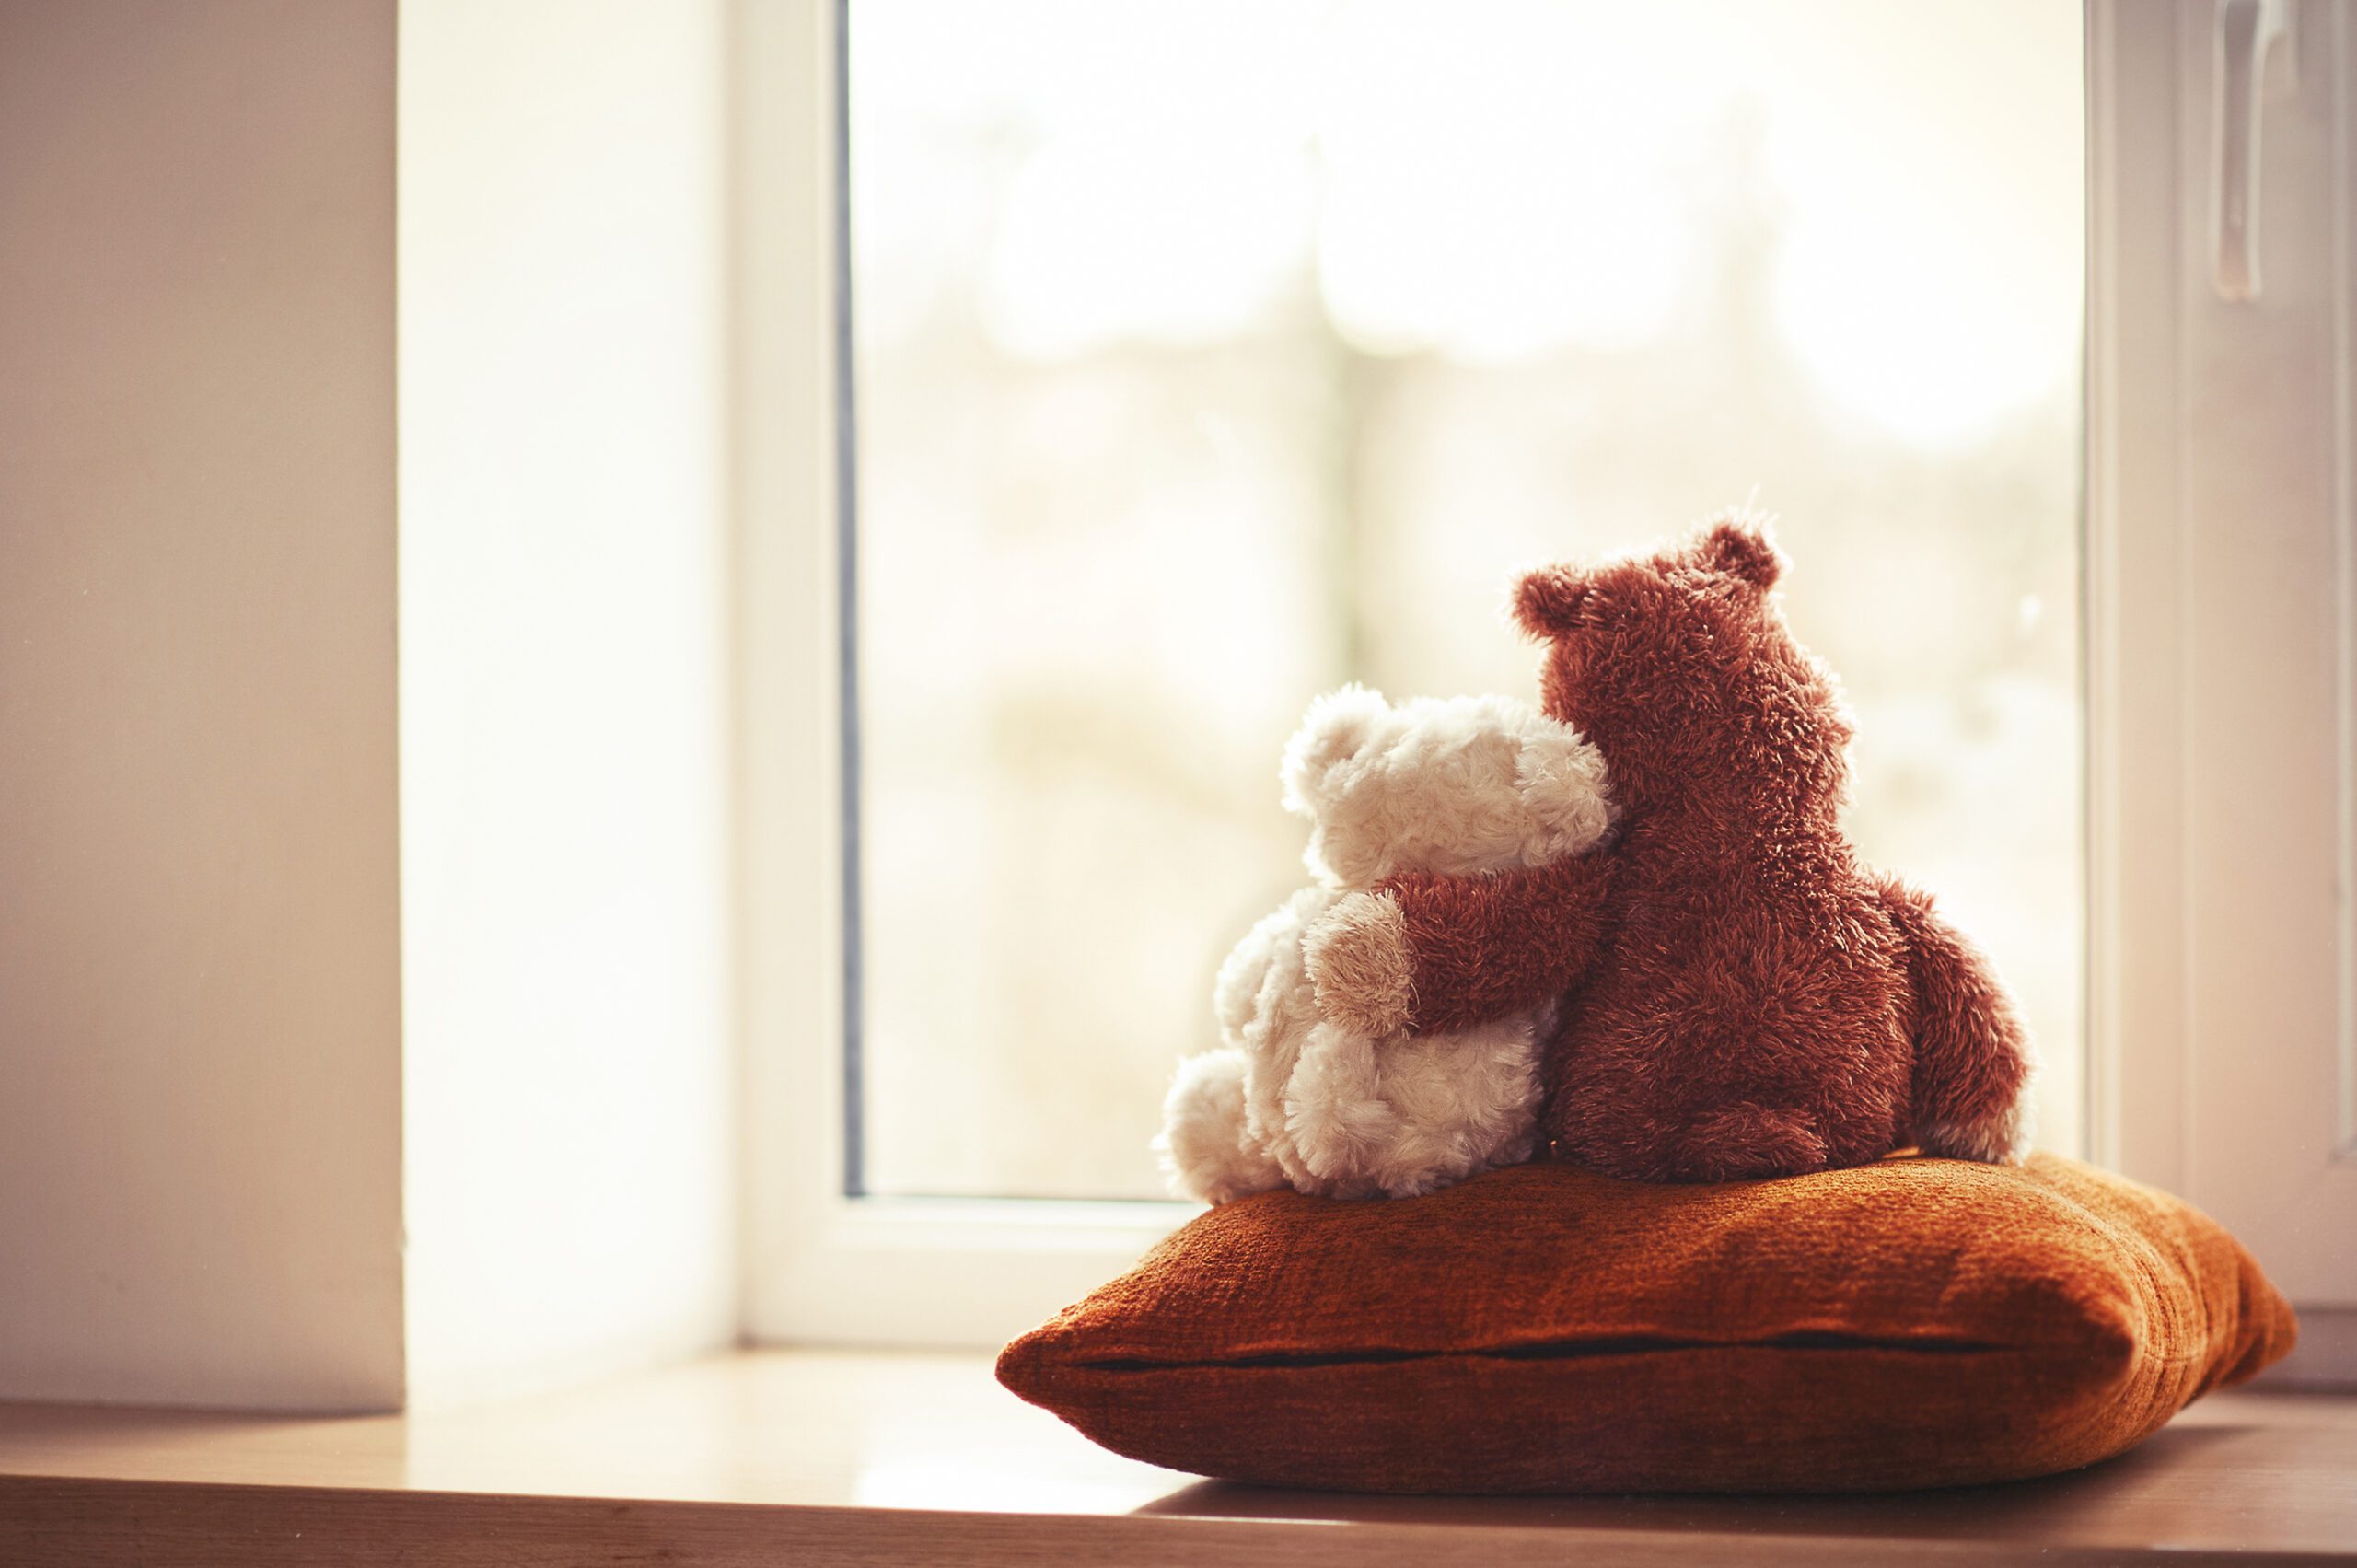 Two stuffed bears embracing